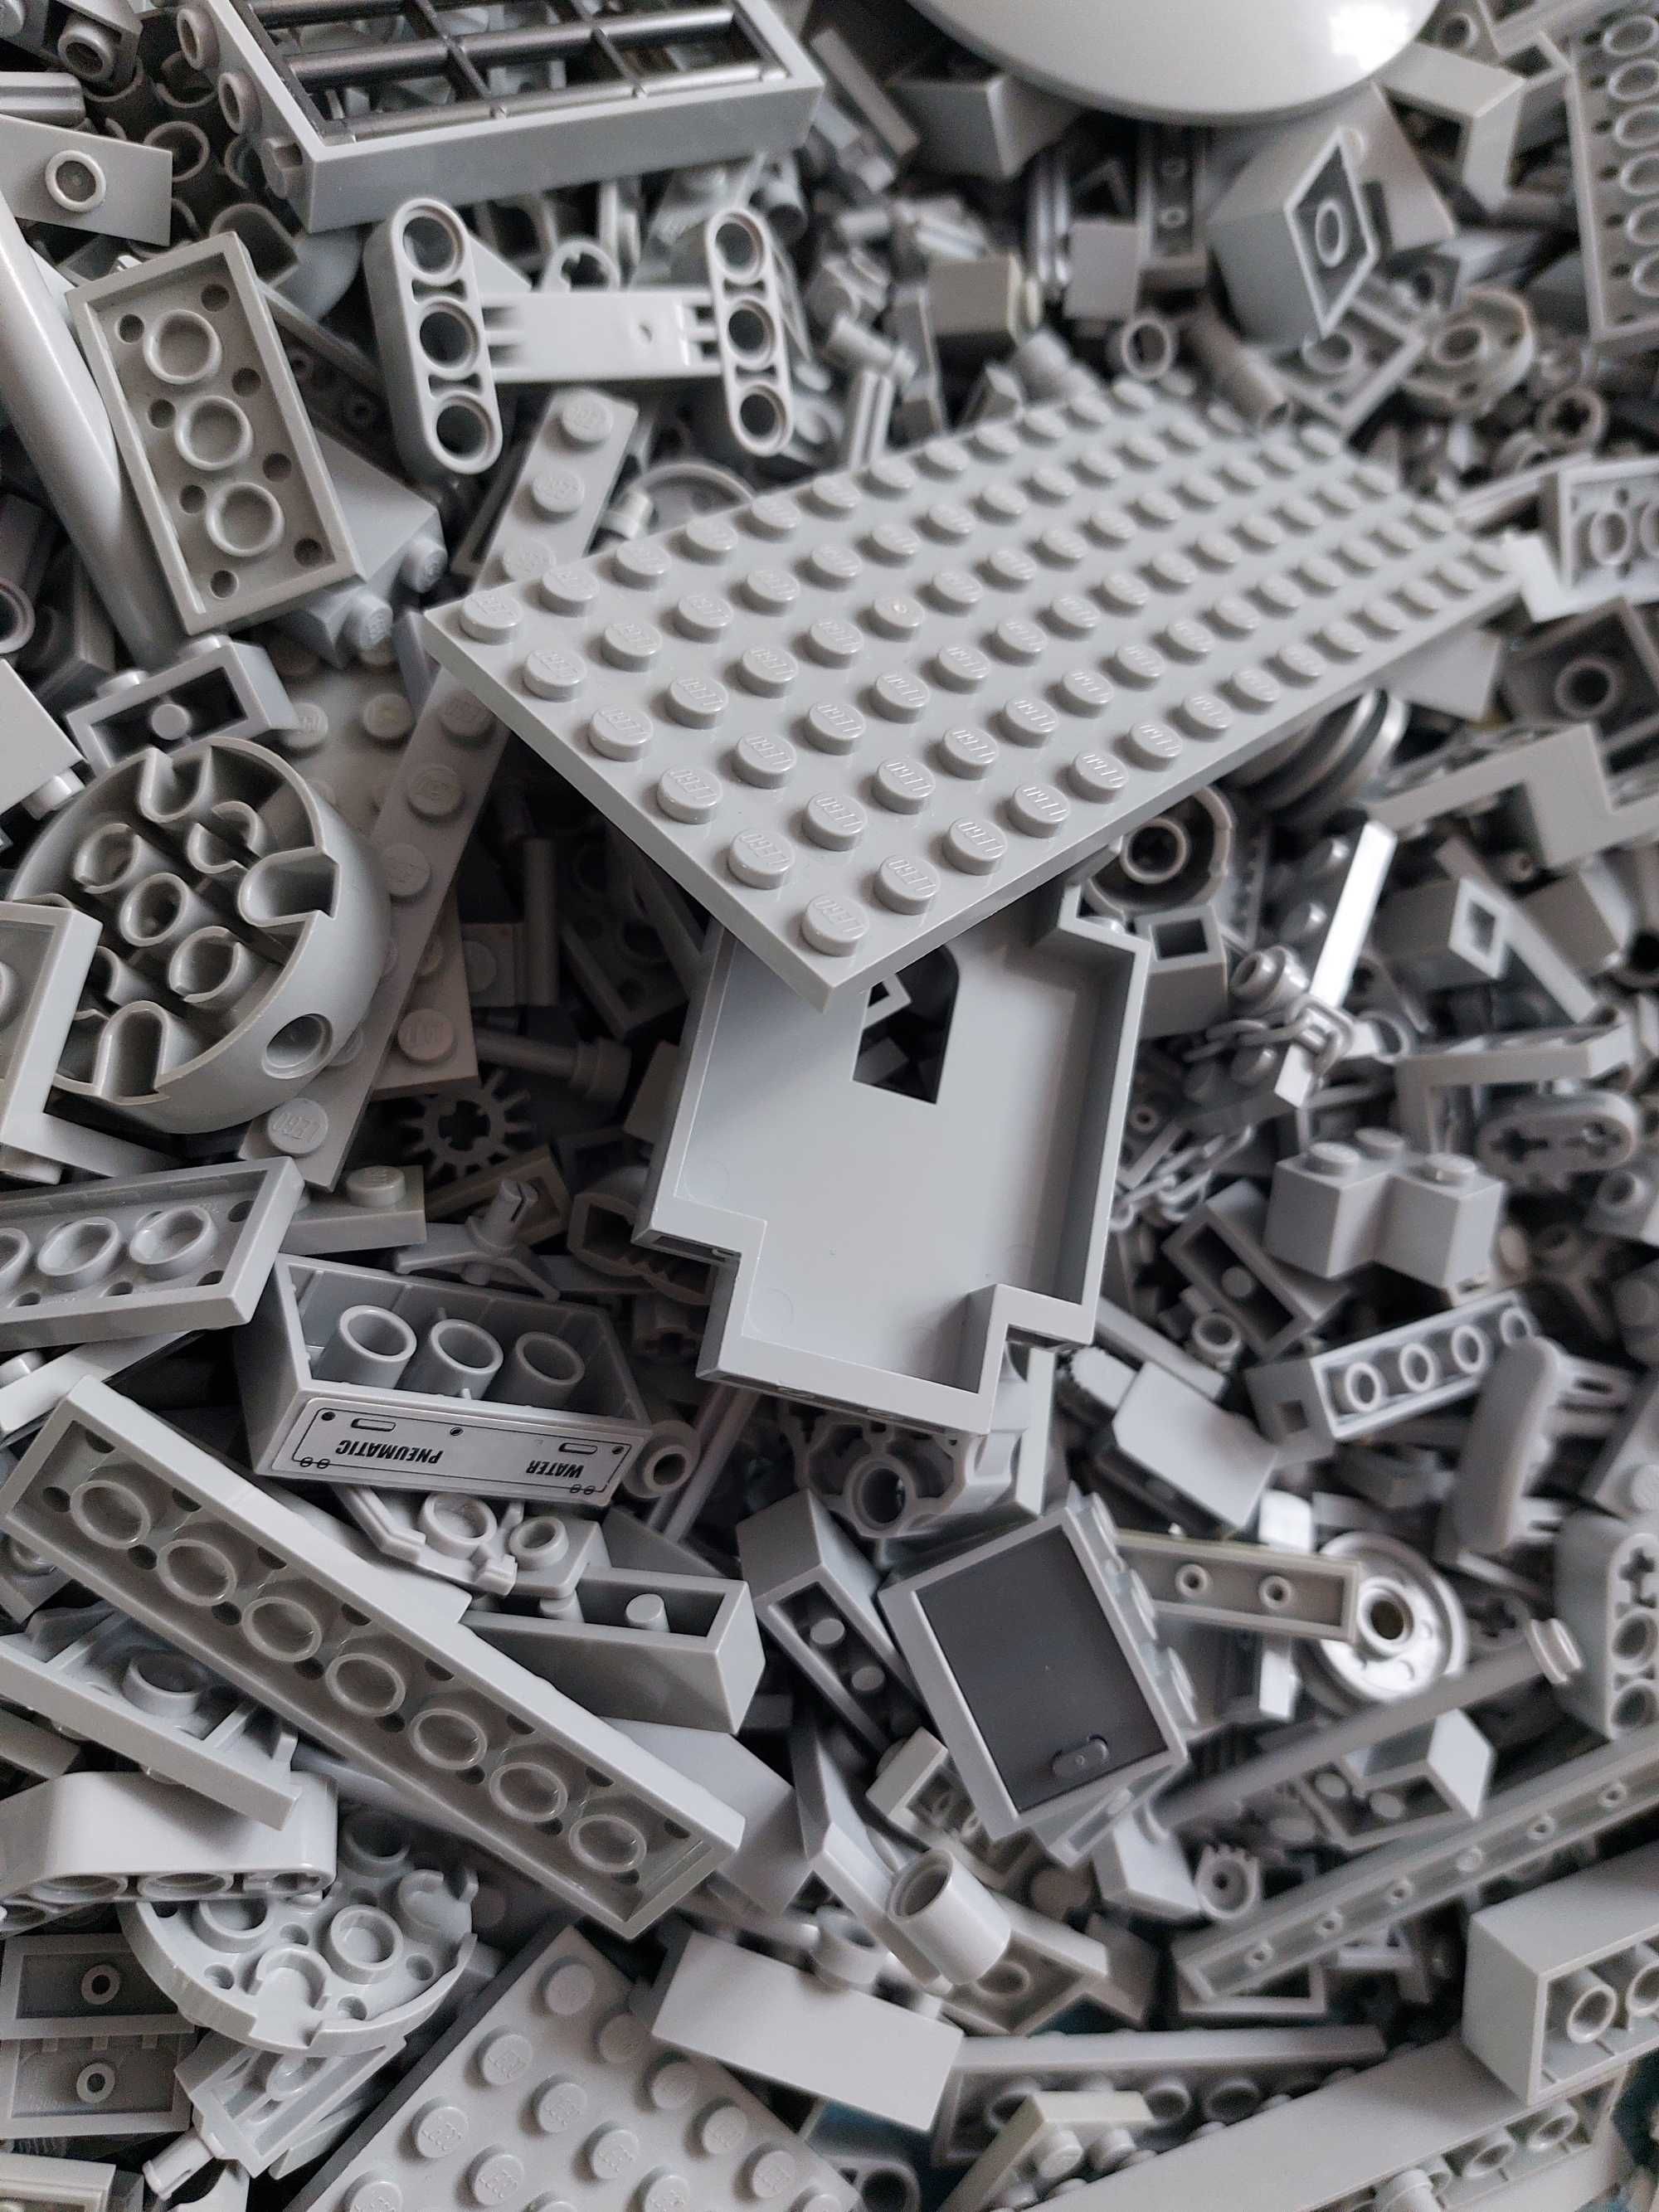 Klocki Lego Szare Oryginalne Posegregowane Mix 0,5 kg 500g